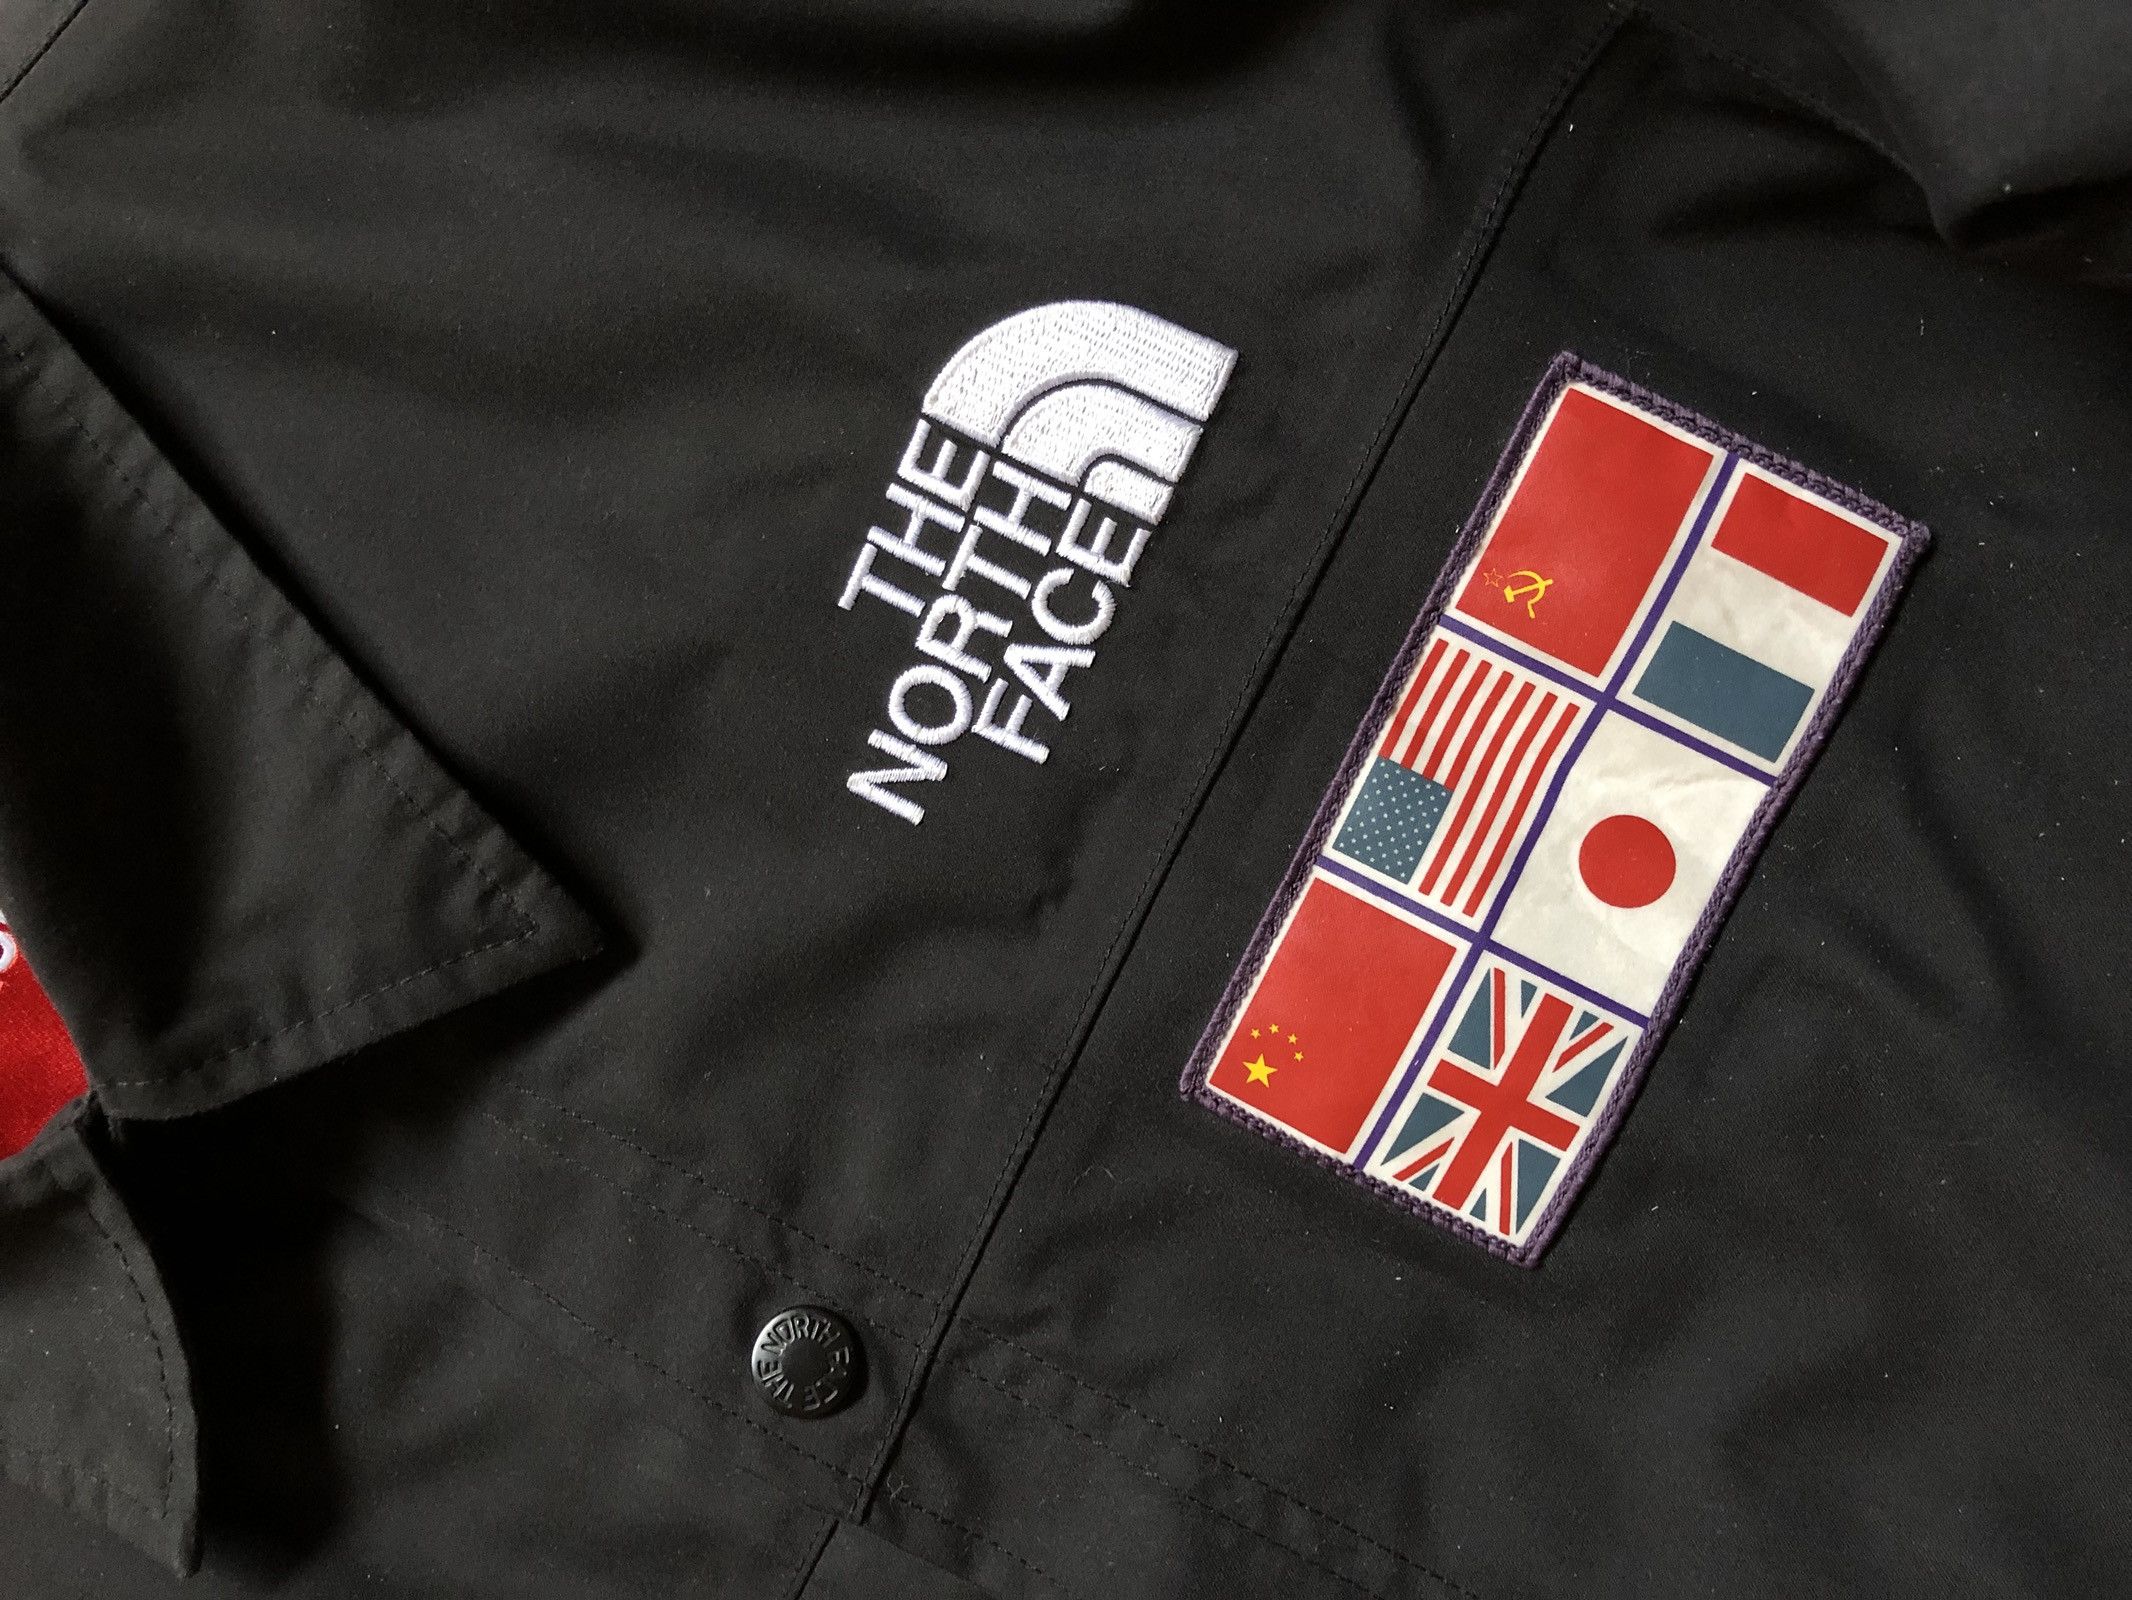 Supreme Supreme The North Face Expedition Coaches Jacket Large Black Size US L / EU 52-54 / 3 - 3 Thumbnail